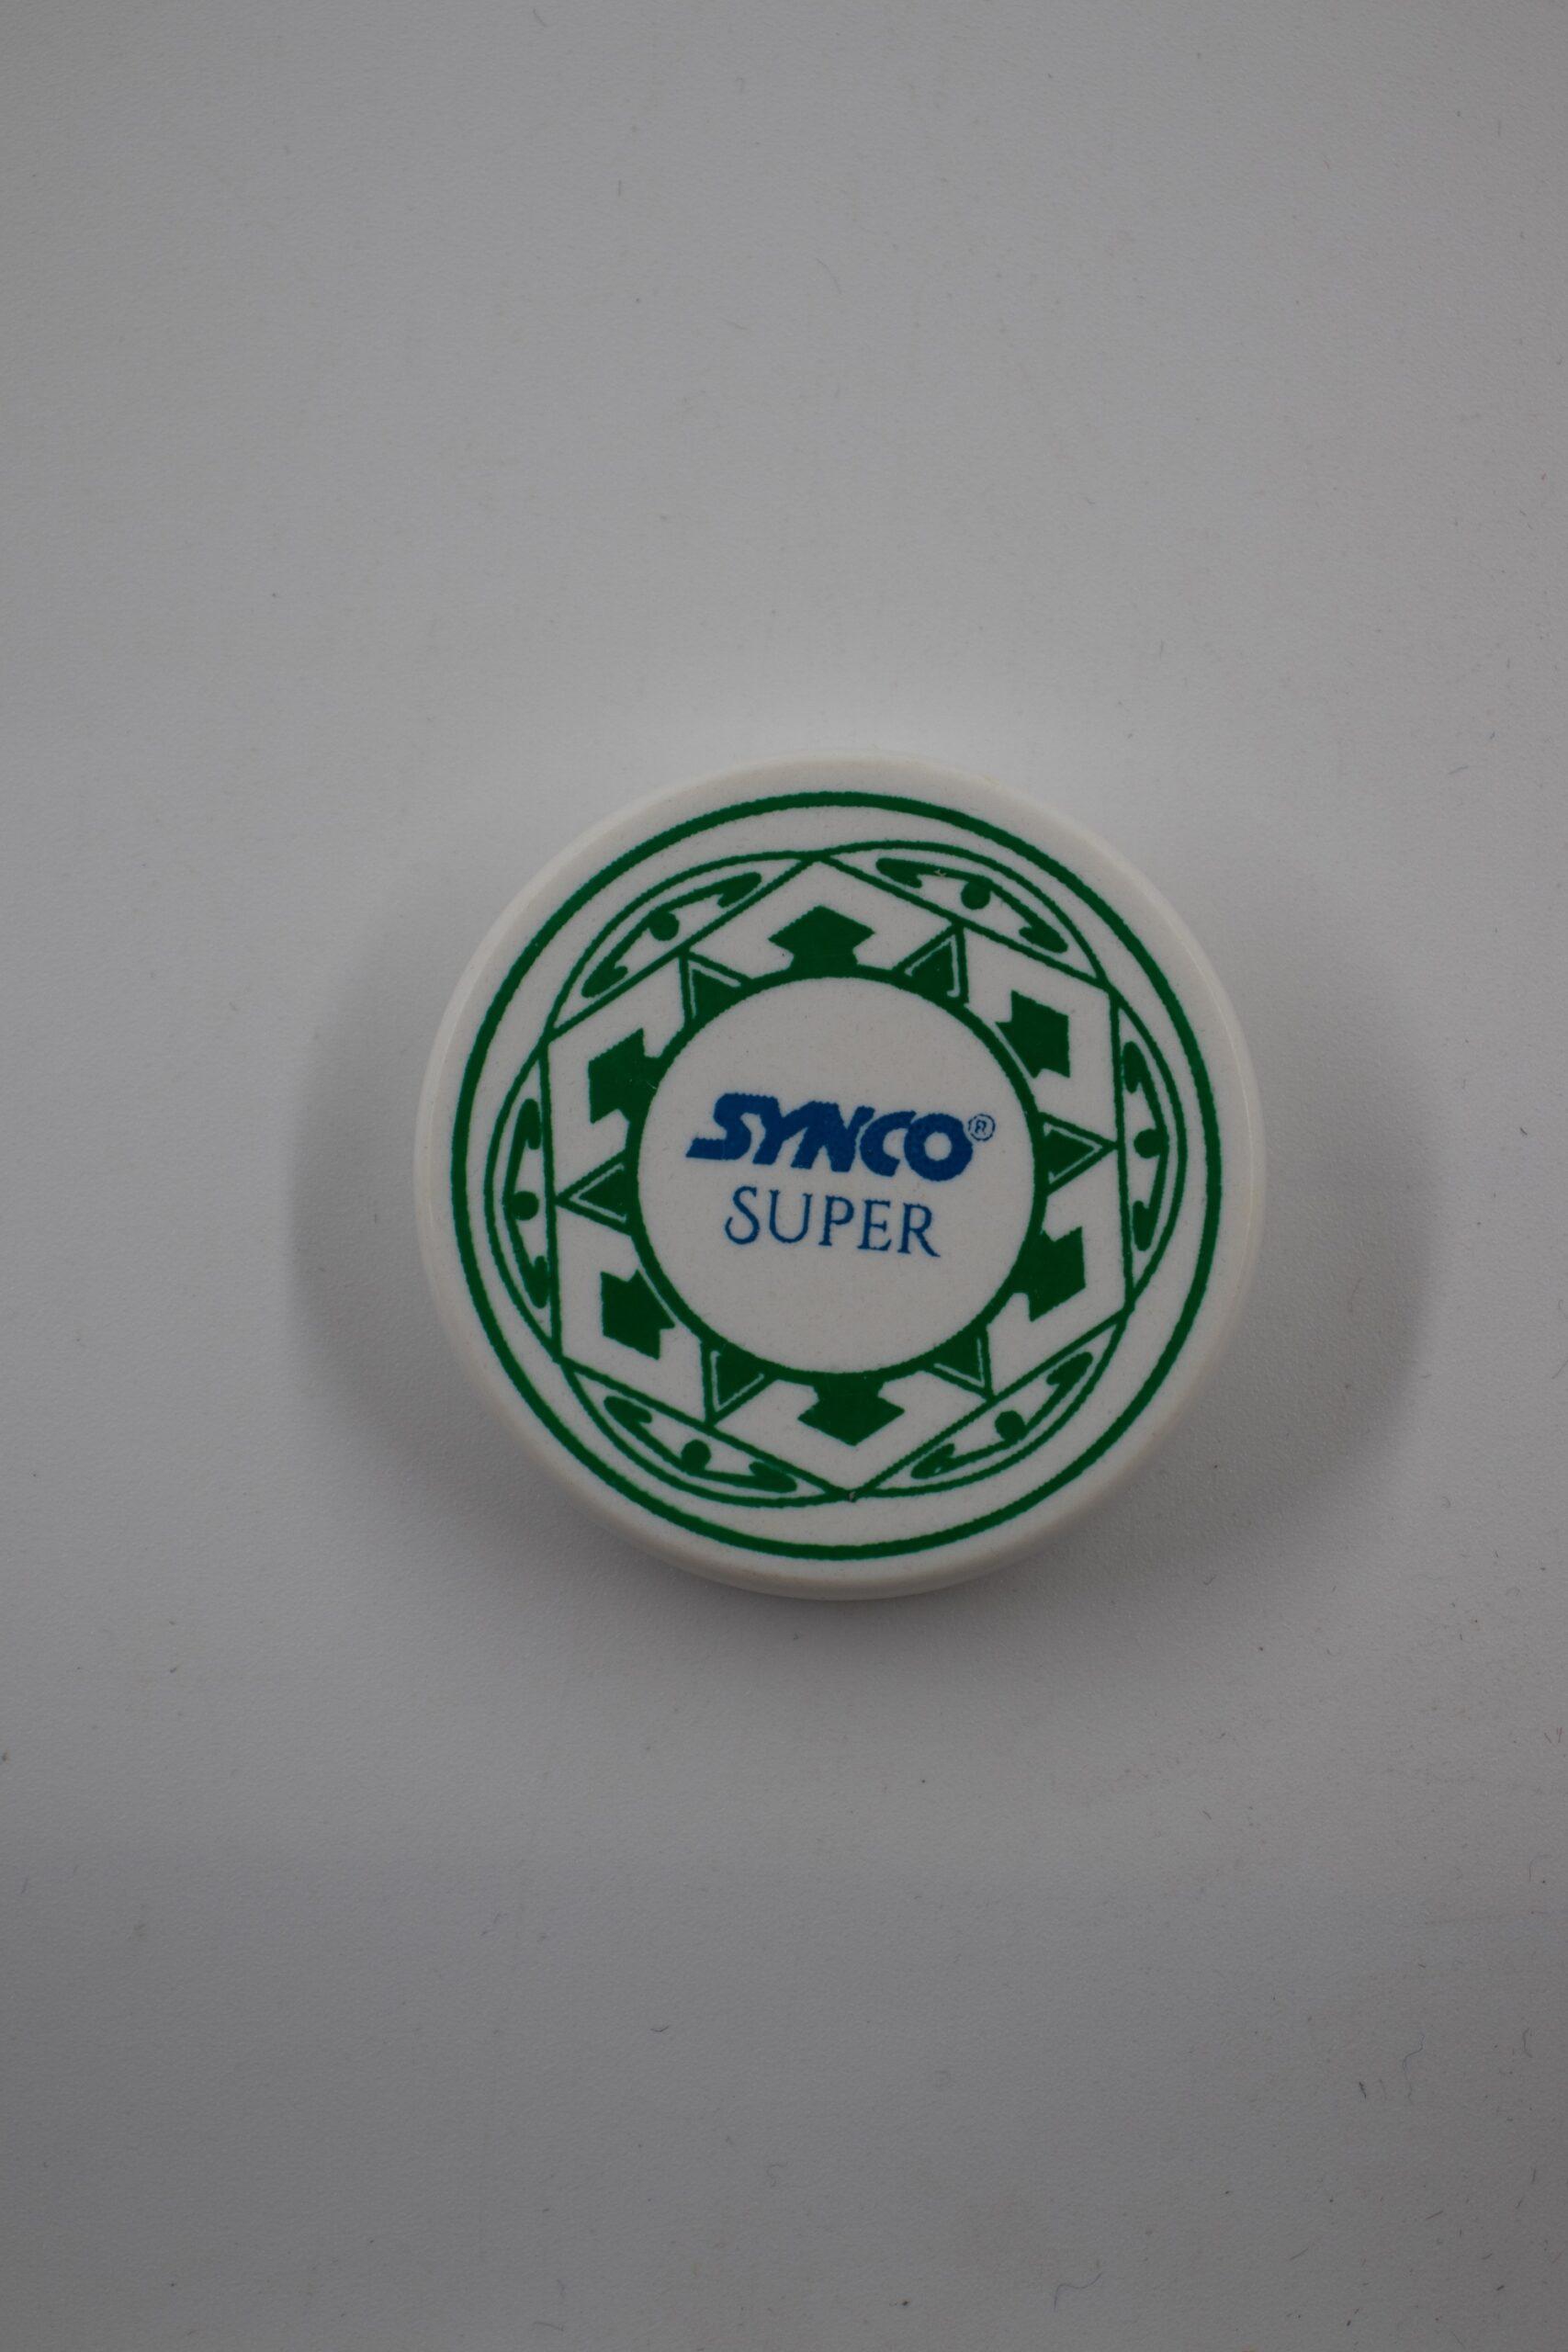 Synco Super Carrom Striker, Assorted color - 1